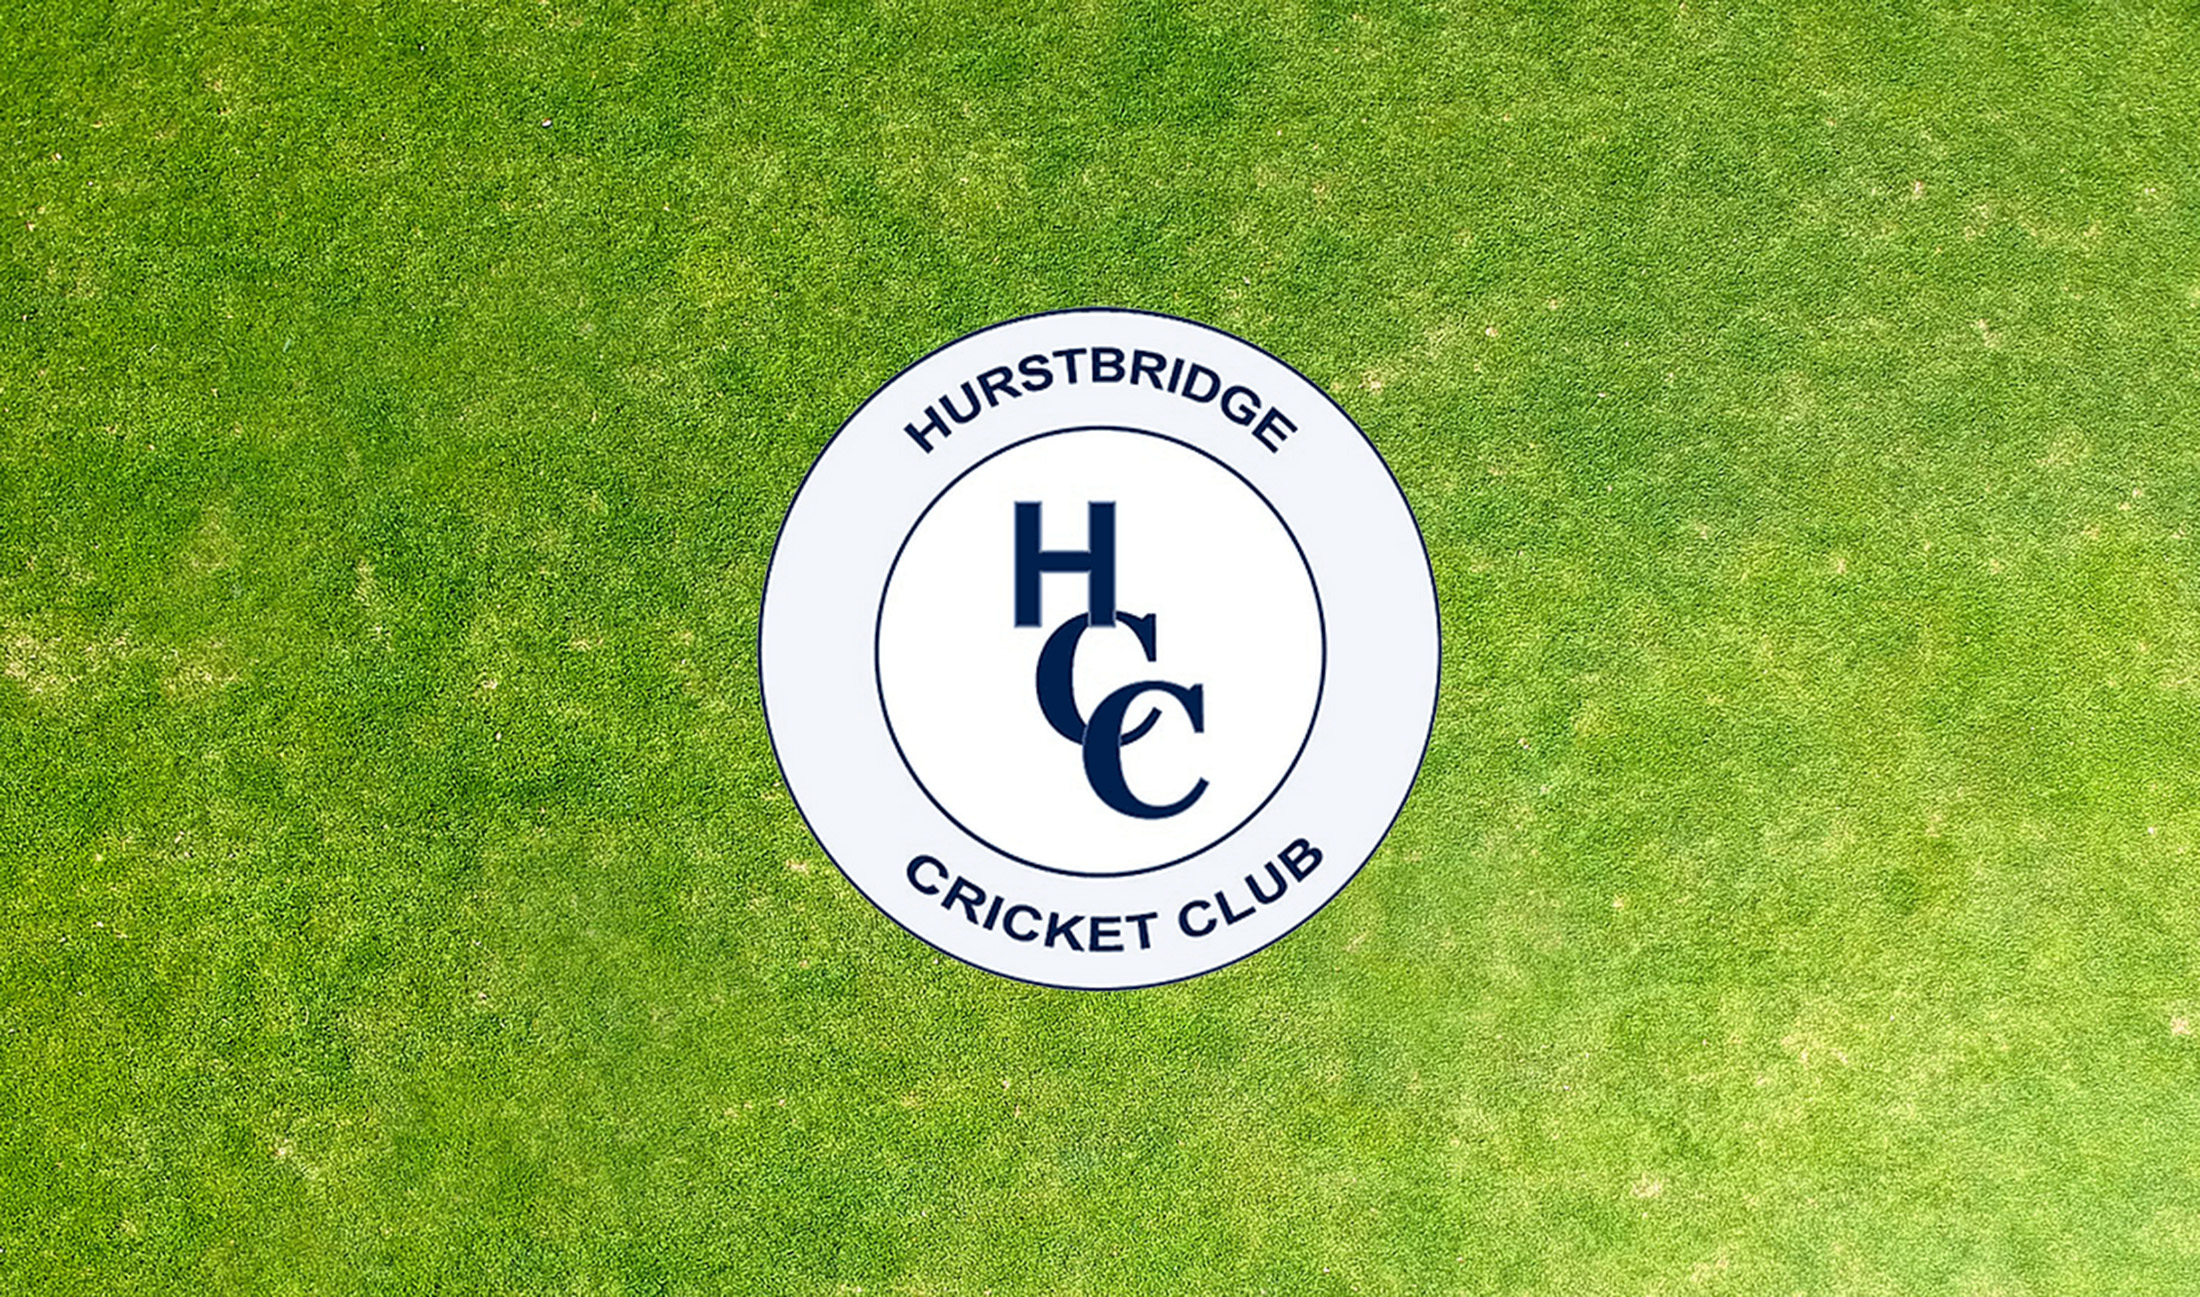 Hurstbridge Cricket Club seeking Senior Coach for season 2022/23